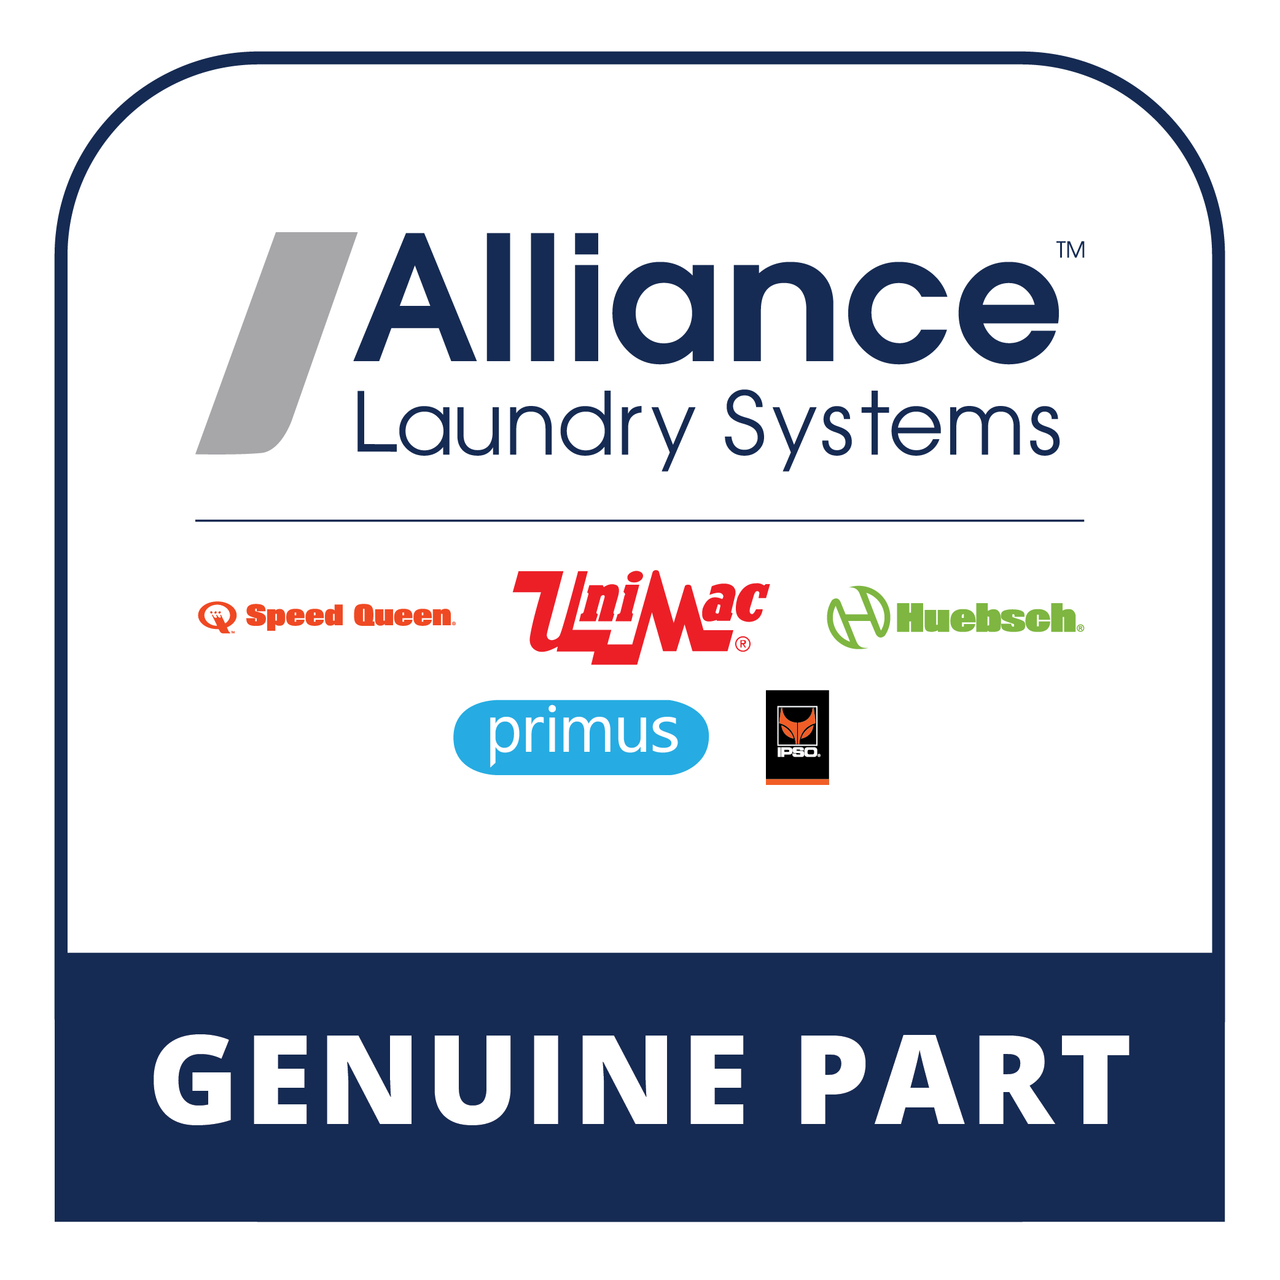 Alliance Laundry Systems D512679 - Overlay Cntrl Pnl-Ed Military - Genuine Alliance Laundry Systems Part